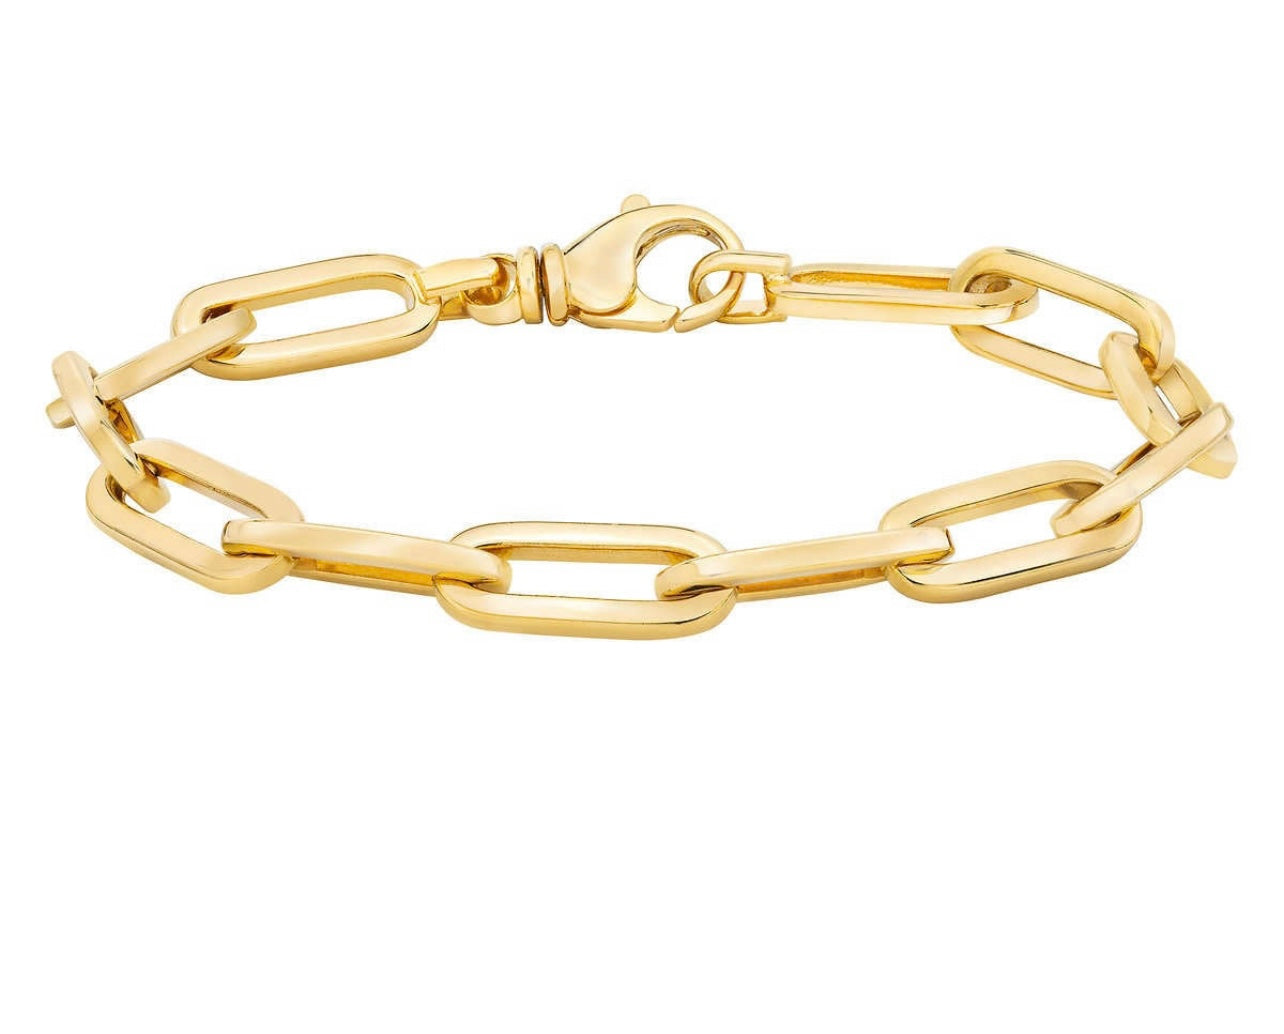 Dainty Gold Bracelet for Women 14K Gold Plated Lightweight Chain